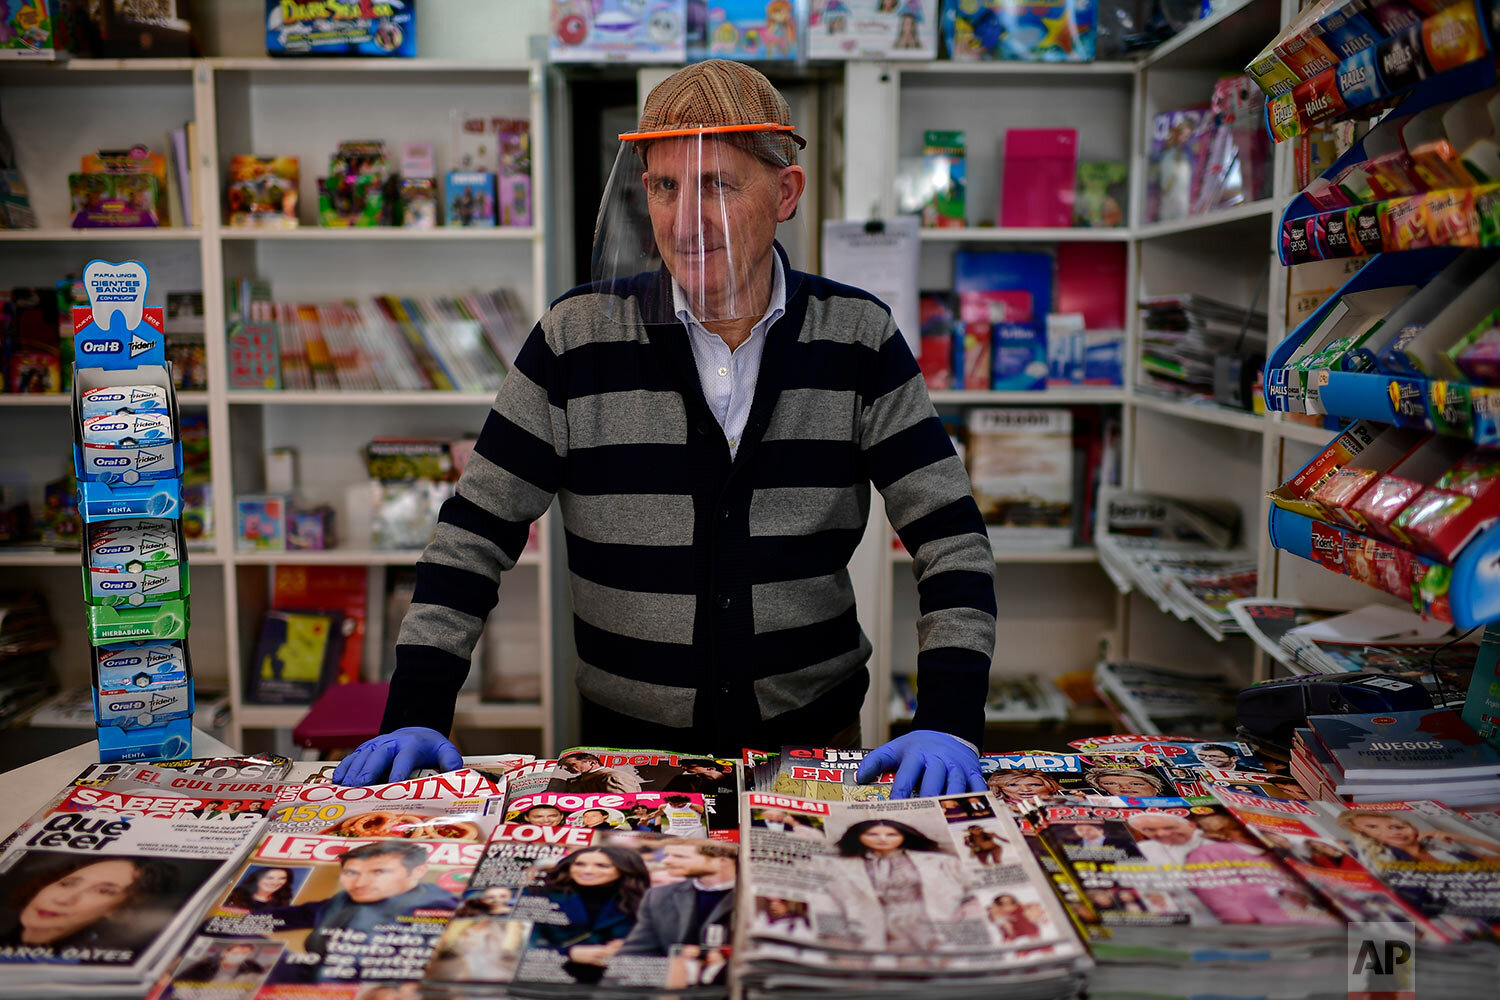  Antonio Leoz poses for a photograph in his book shop in Pamplona, northern Spain. (AP Photo/Alvaro Barrientos) 